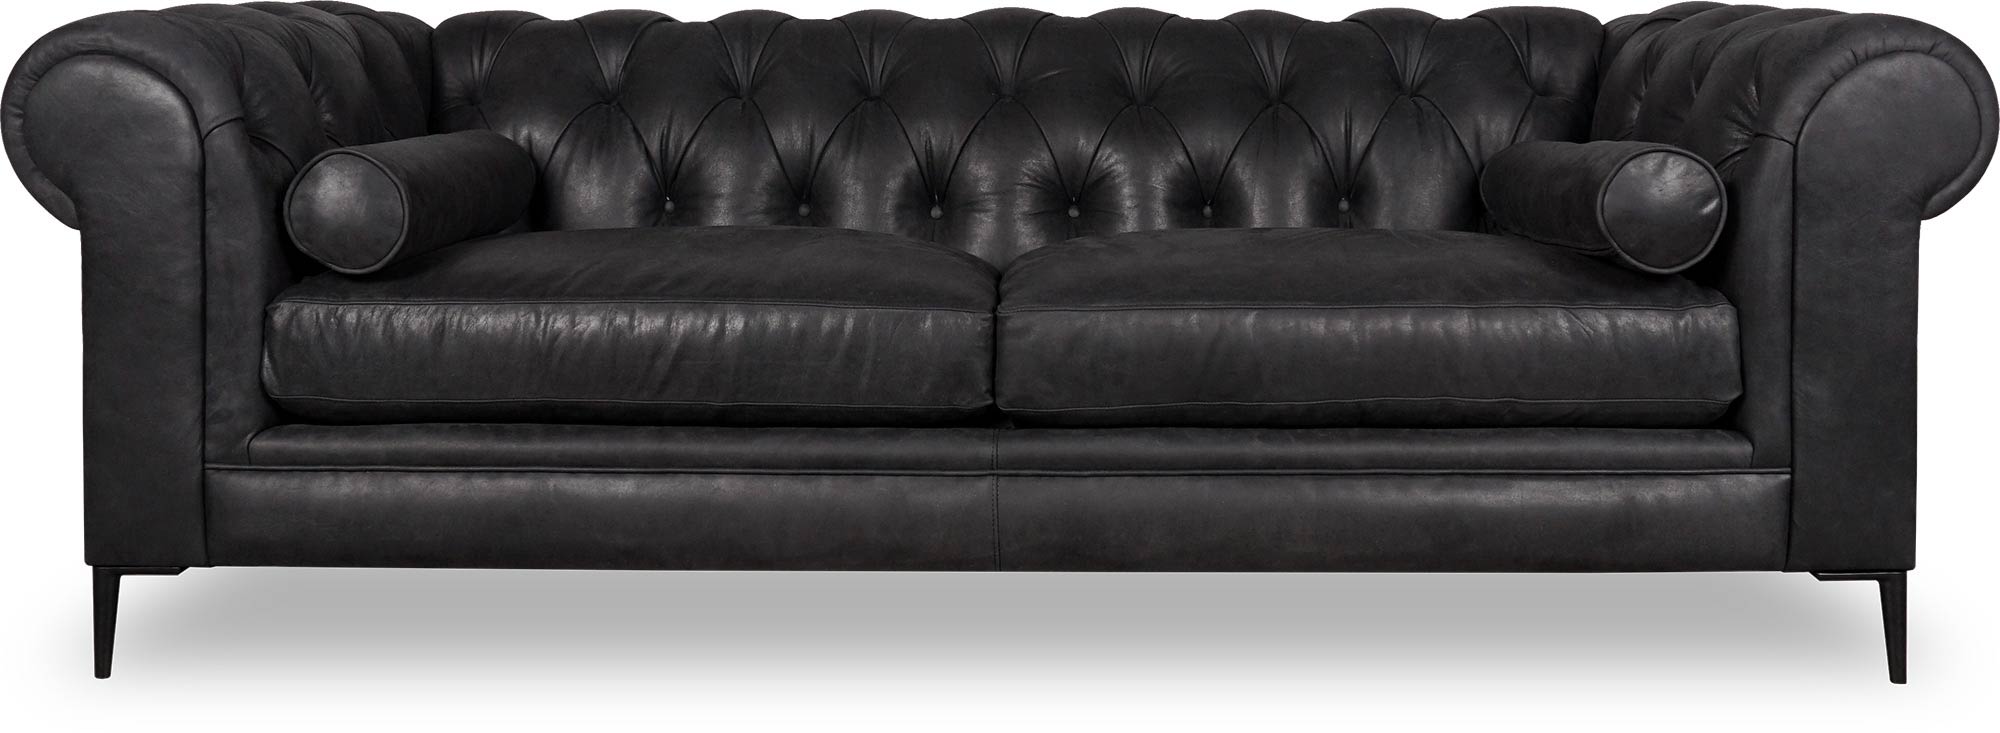 91 Eliza modern Chesterfield in Burnham Black with cushion seat, black aluminum legs, and bolster pillows